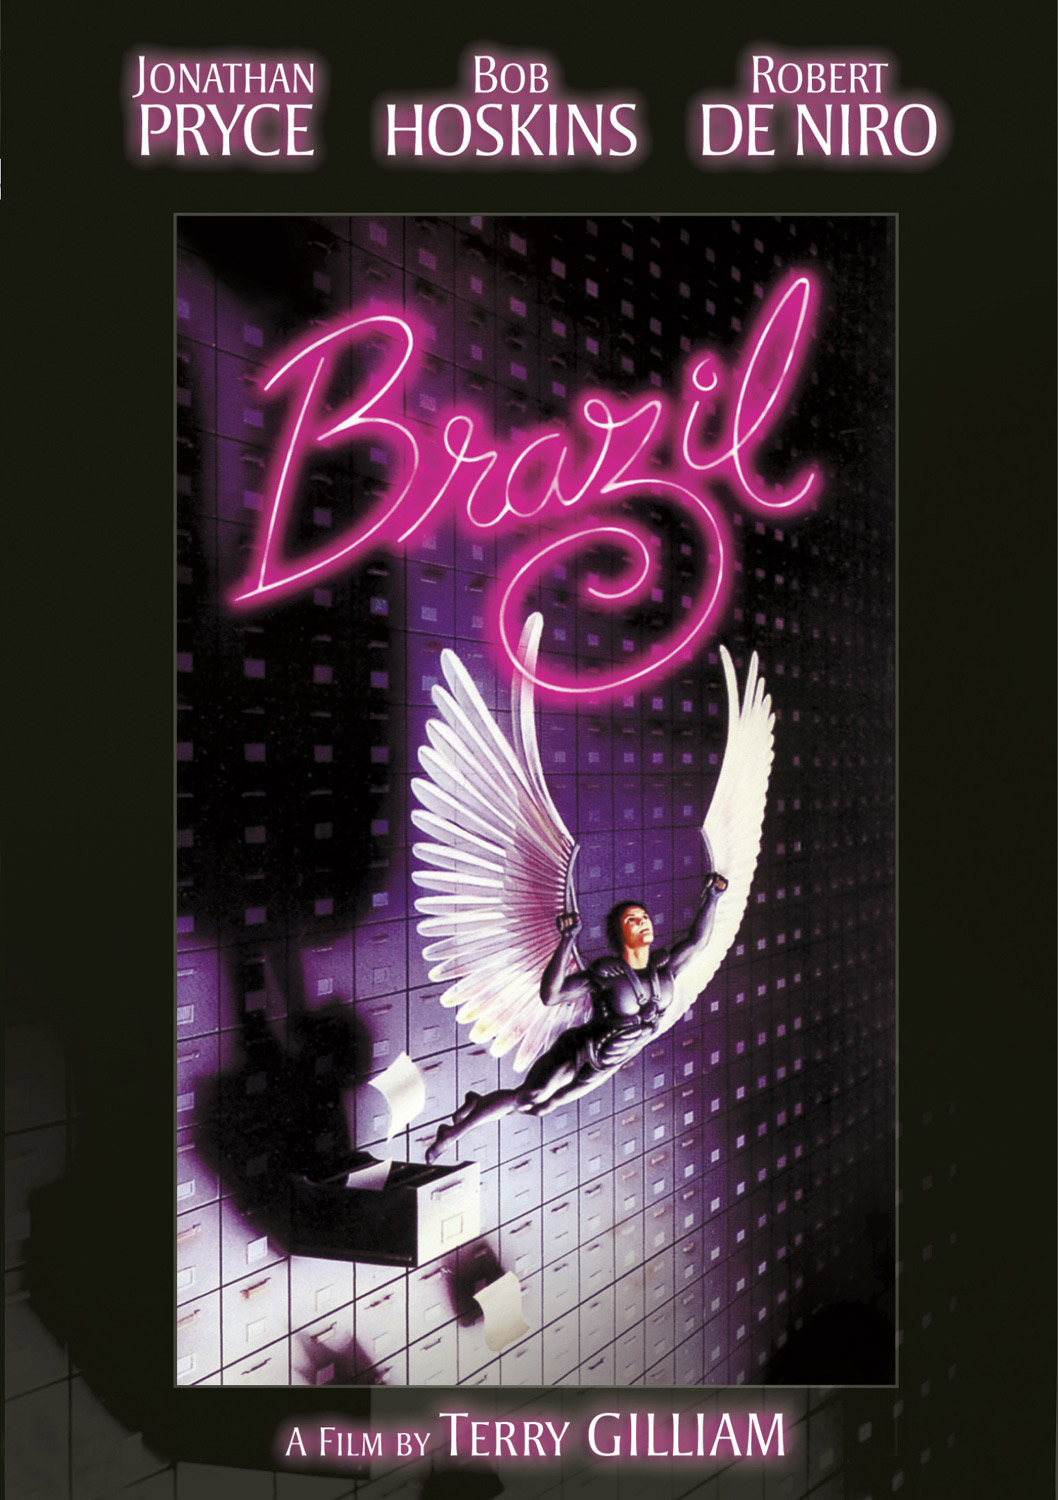 https://blogger.googleusercontent.com/img/b/R29vZ2xl/AVvXsEi3bizMw4hUd0erwhr2dHDEL69JAOi2m1uBsYybBWfFjmvmPmh59ECWF5te3y4idtFThDnTwccXUzDH33vtEjtW8bRrh0Cm2wMrnixdHXdaAQcCn9fSJ9LHBqfNn7IMbiEcyNn-kMg-Nkw/s1600/Brazil-1985-movie-wallpaper.jpg